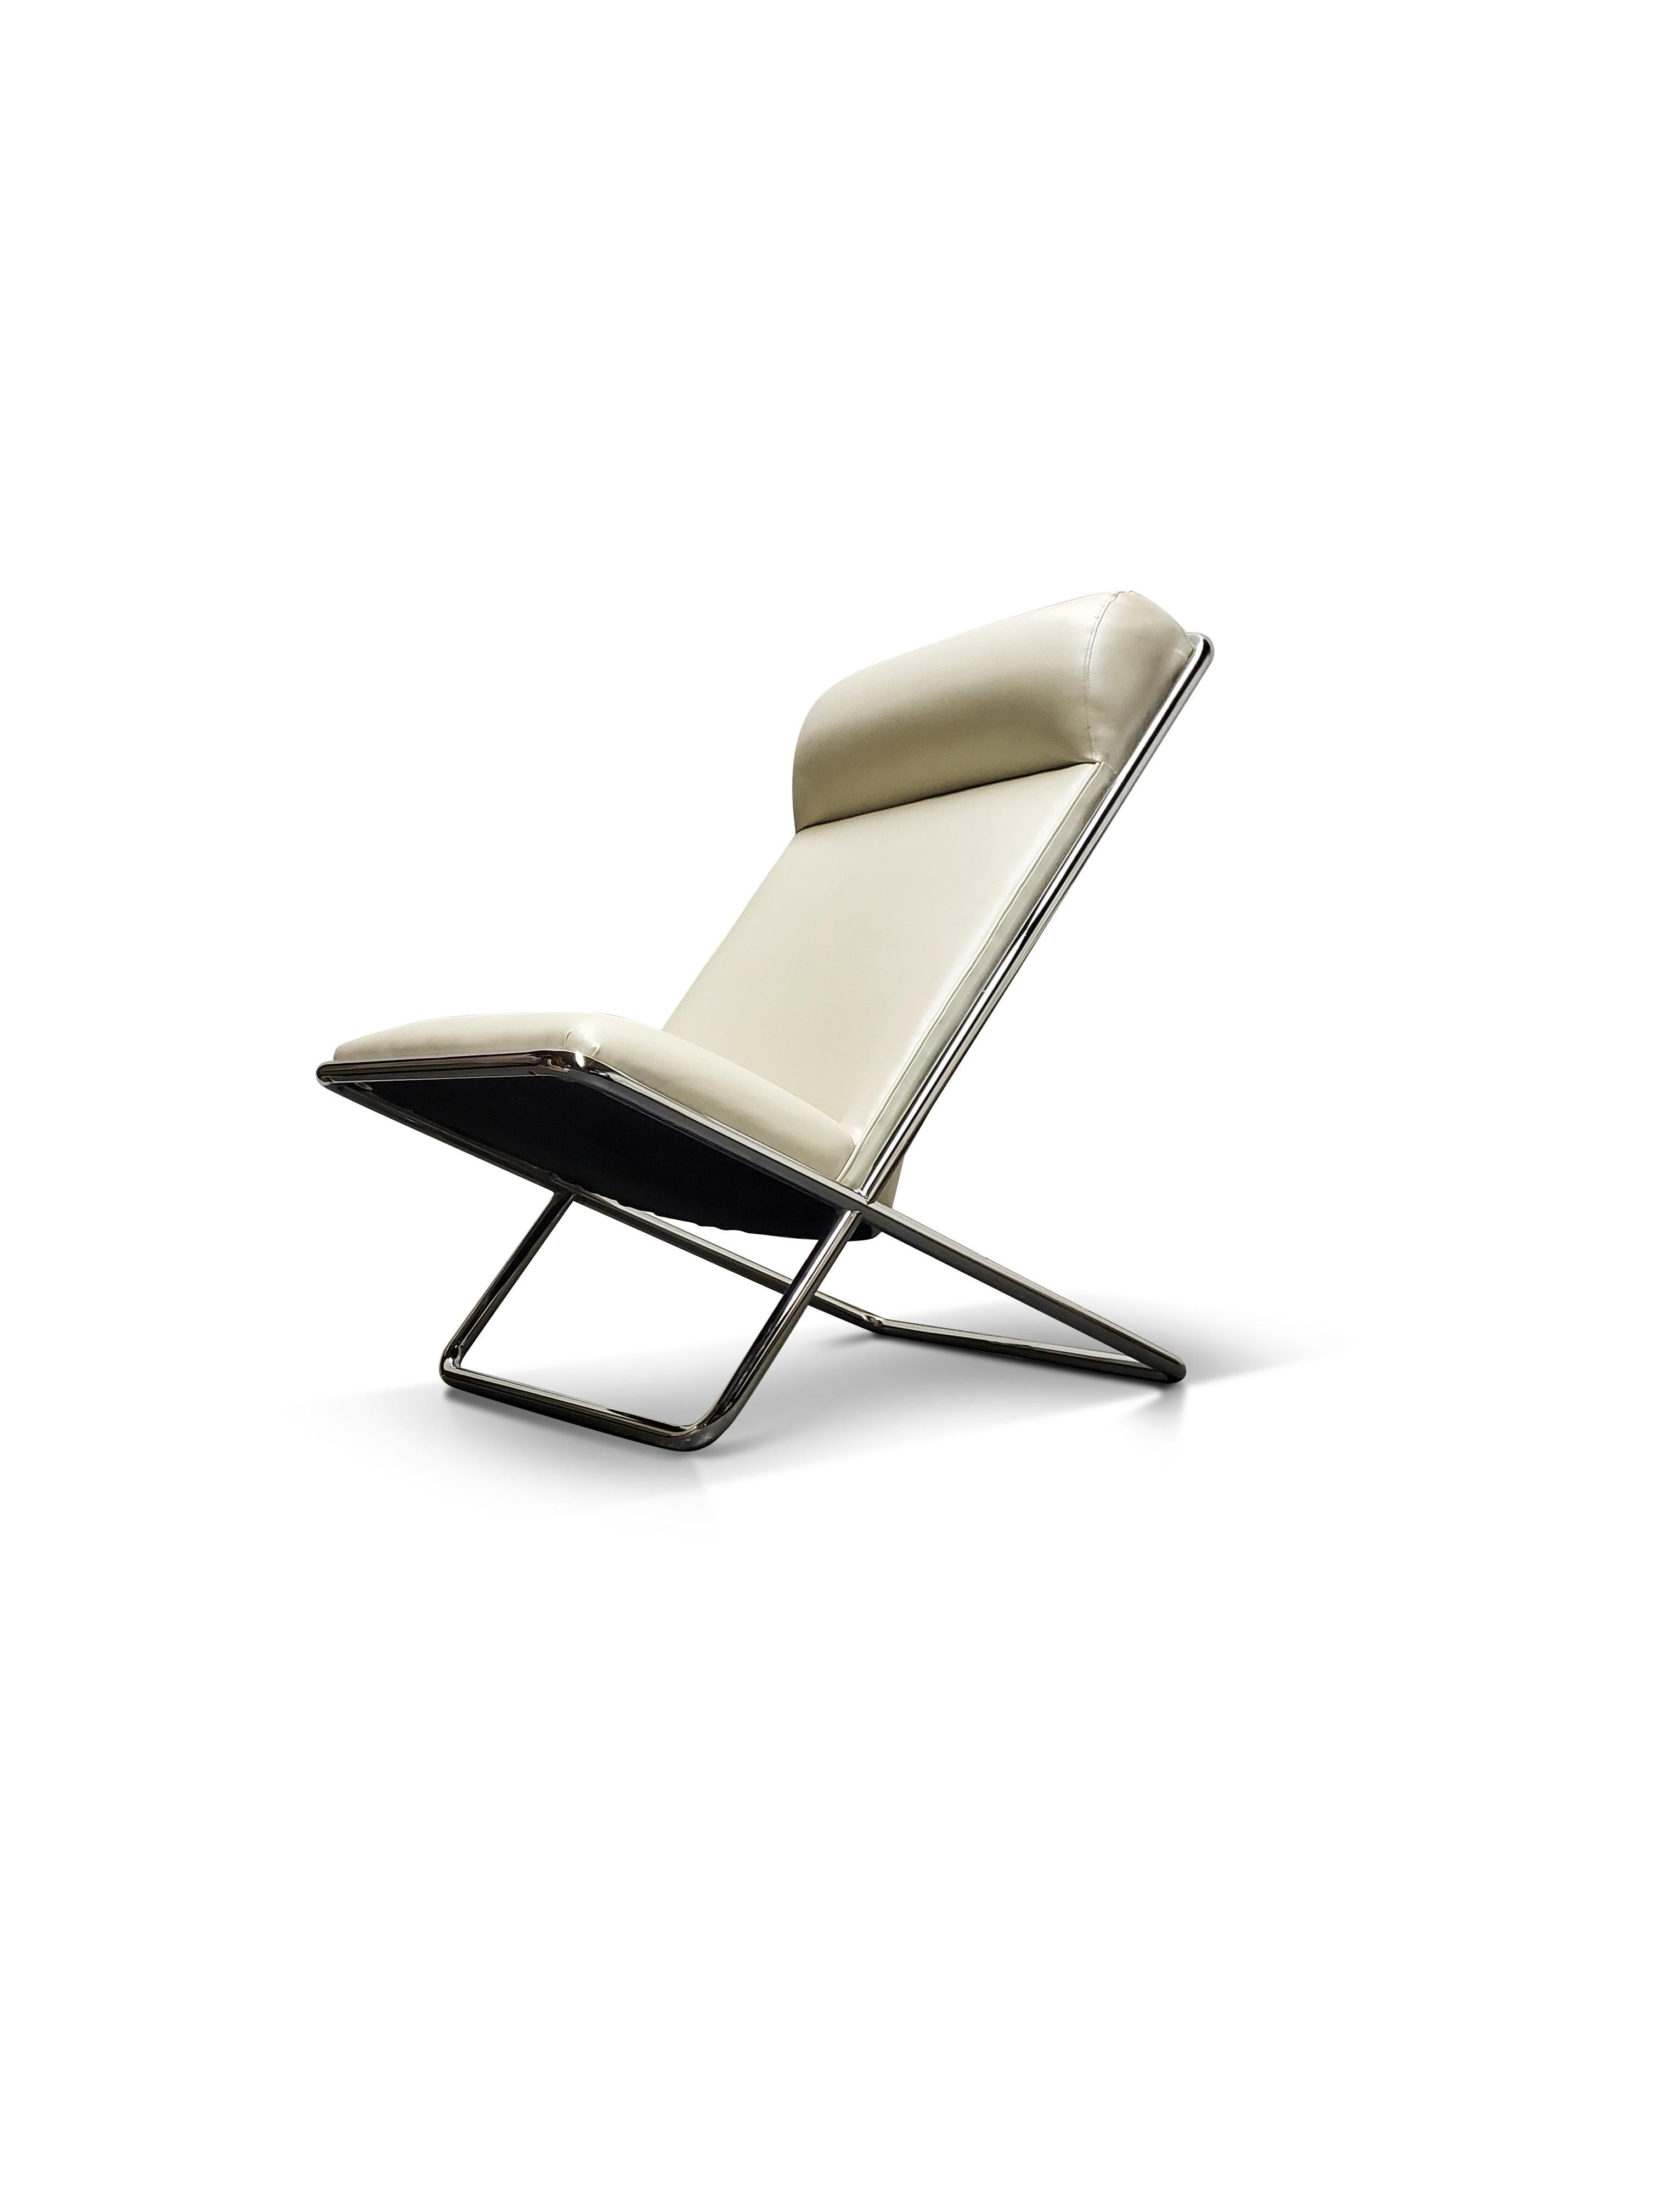 Ward Bennett Scissor Lounge Chair  For Sale 6